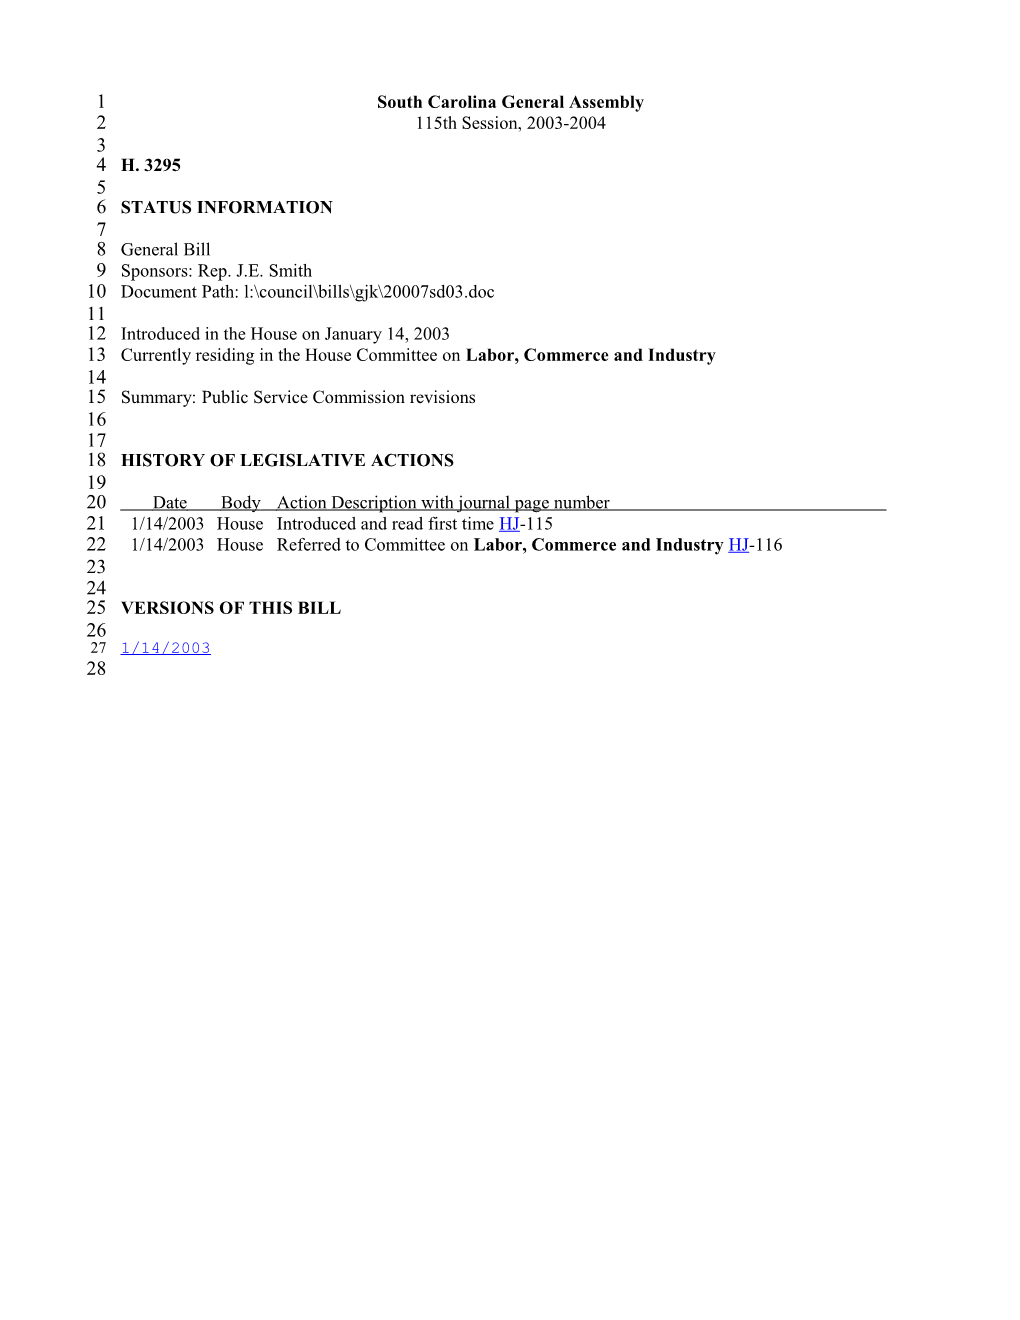 2003-2004 Bill 3295: Public Service Commission Revisions - South Carolina Legislature Online